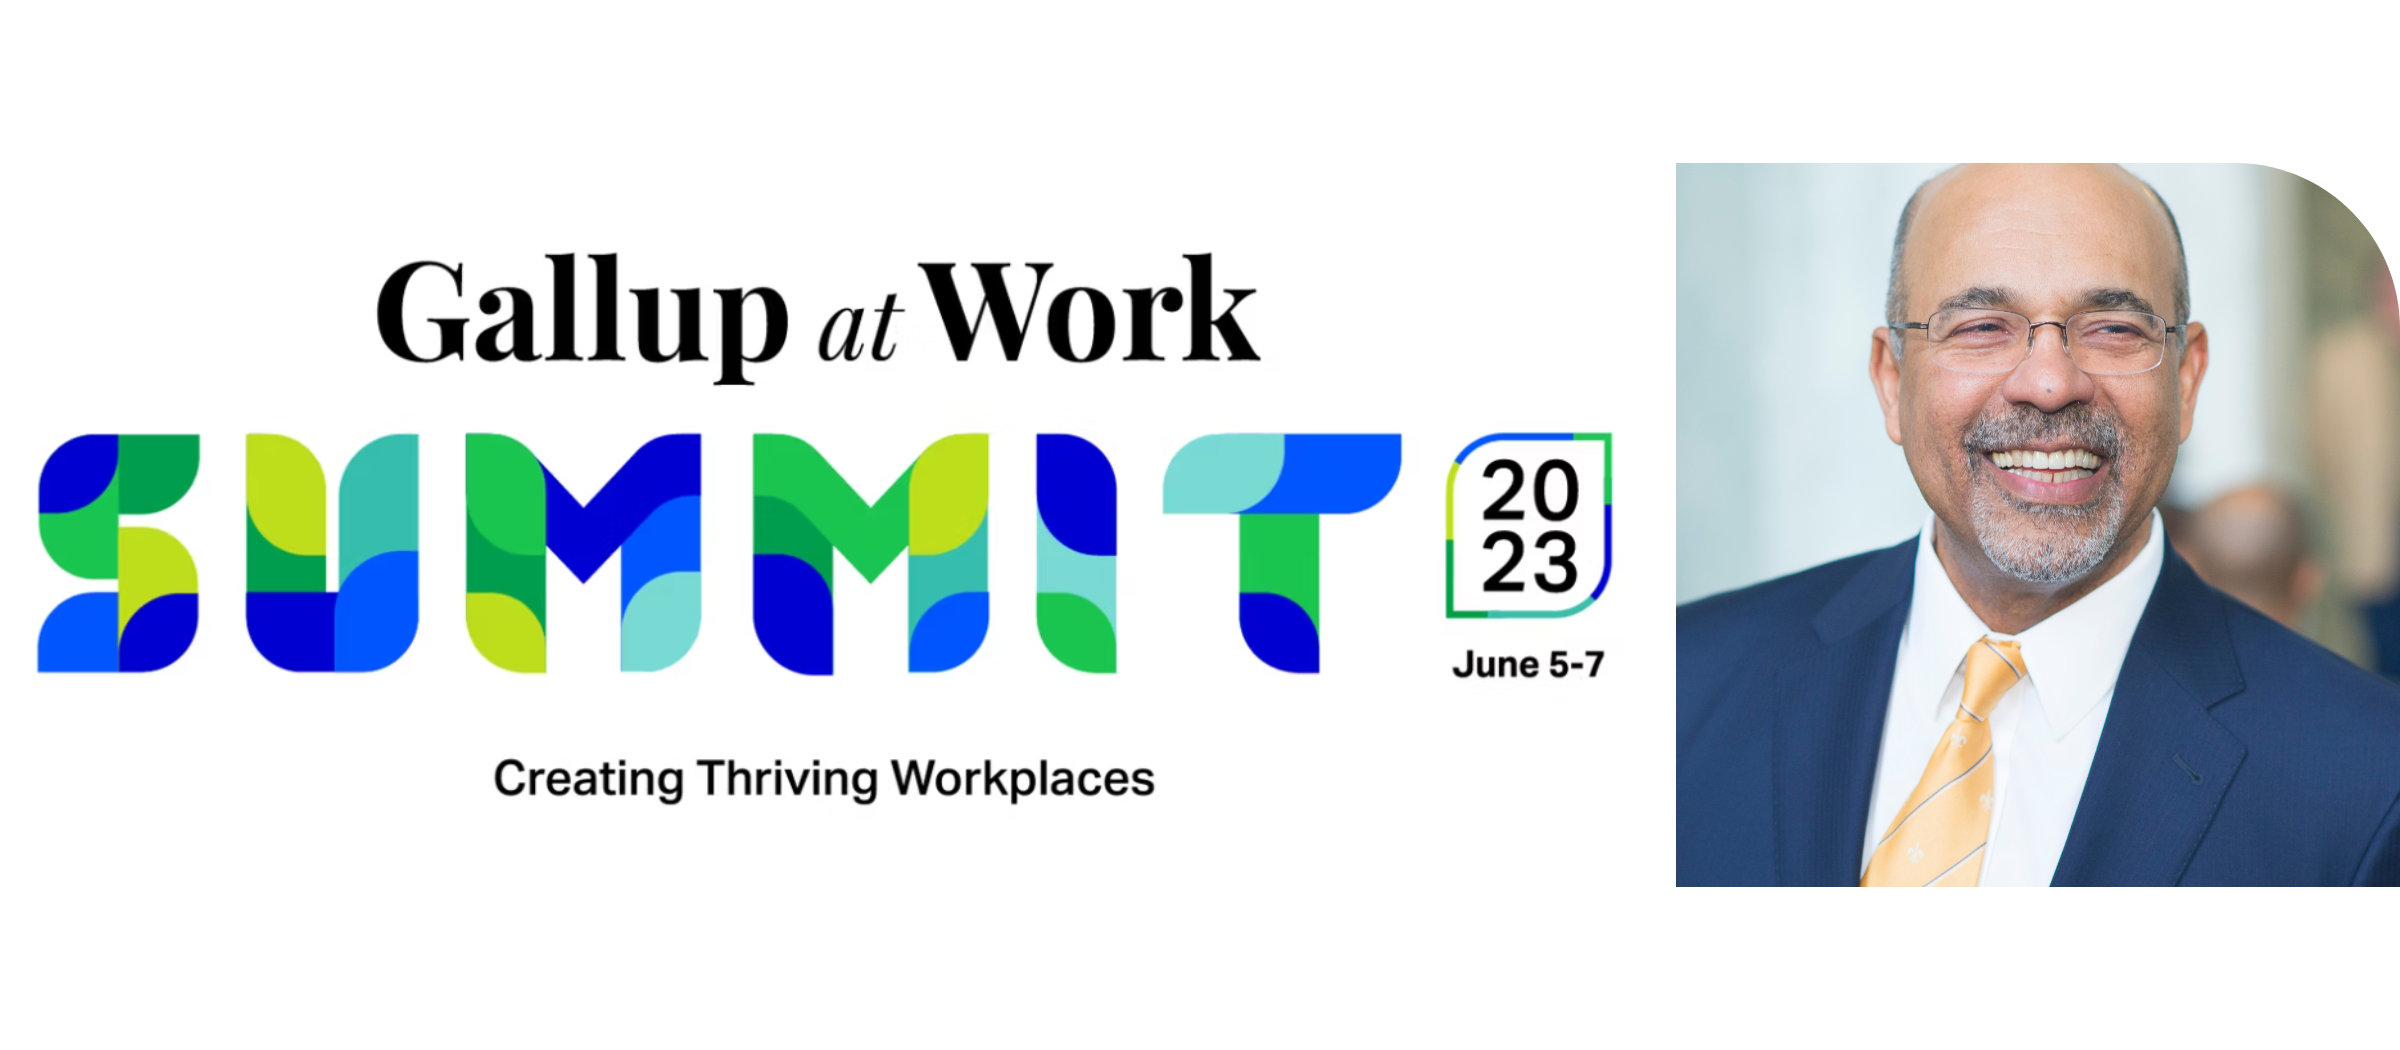 UDC President to speak at Gallup at Work Summit